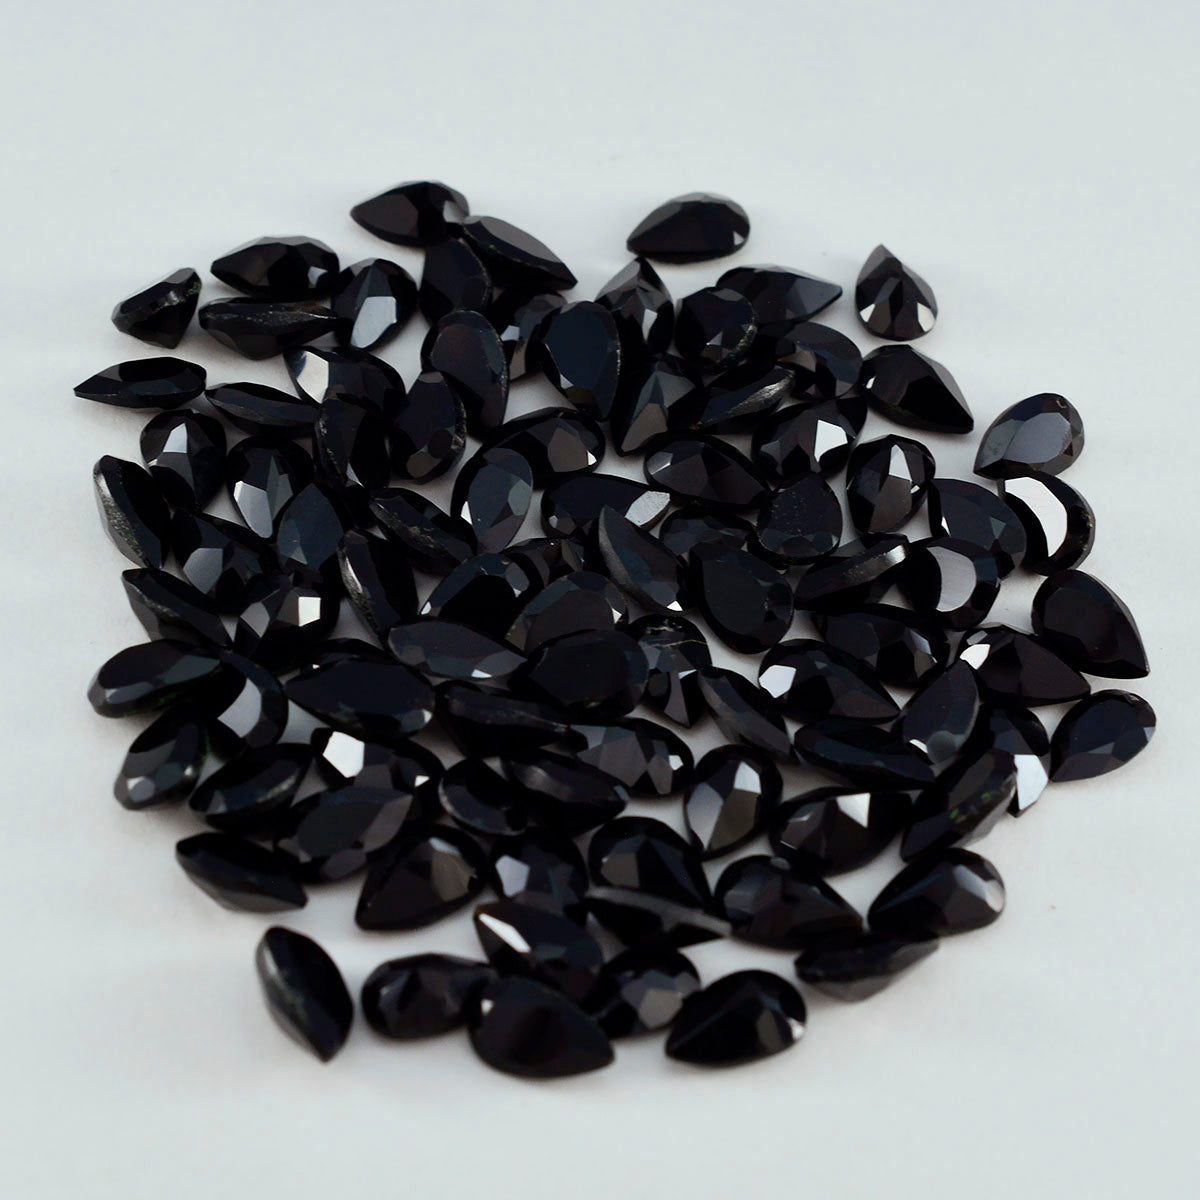 Riyogems 1PC Real Black Onyx Faceted 5x7 mm Pear Shape A Quality Loose Gemstone